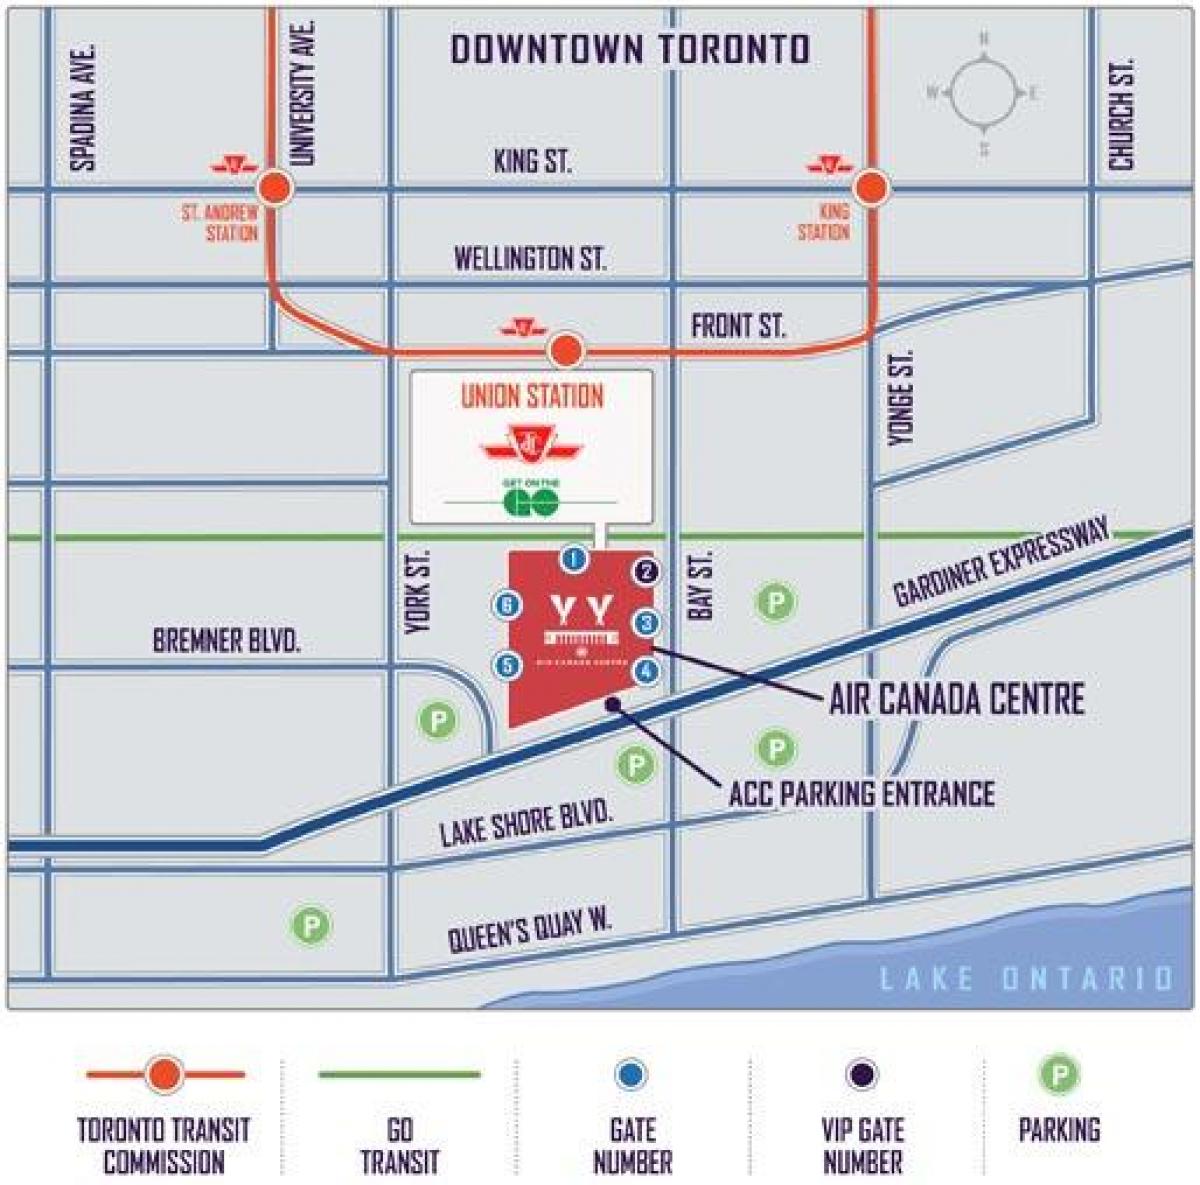 Air Canada Centre Park haritası - ACC